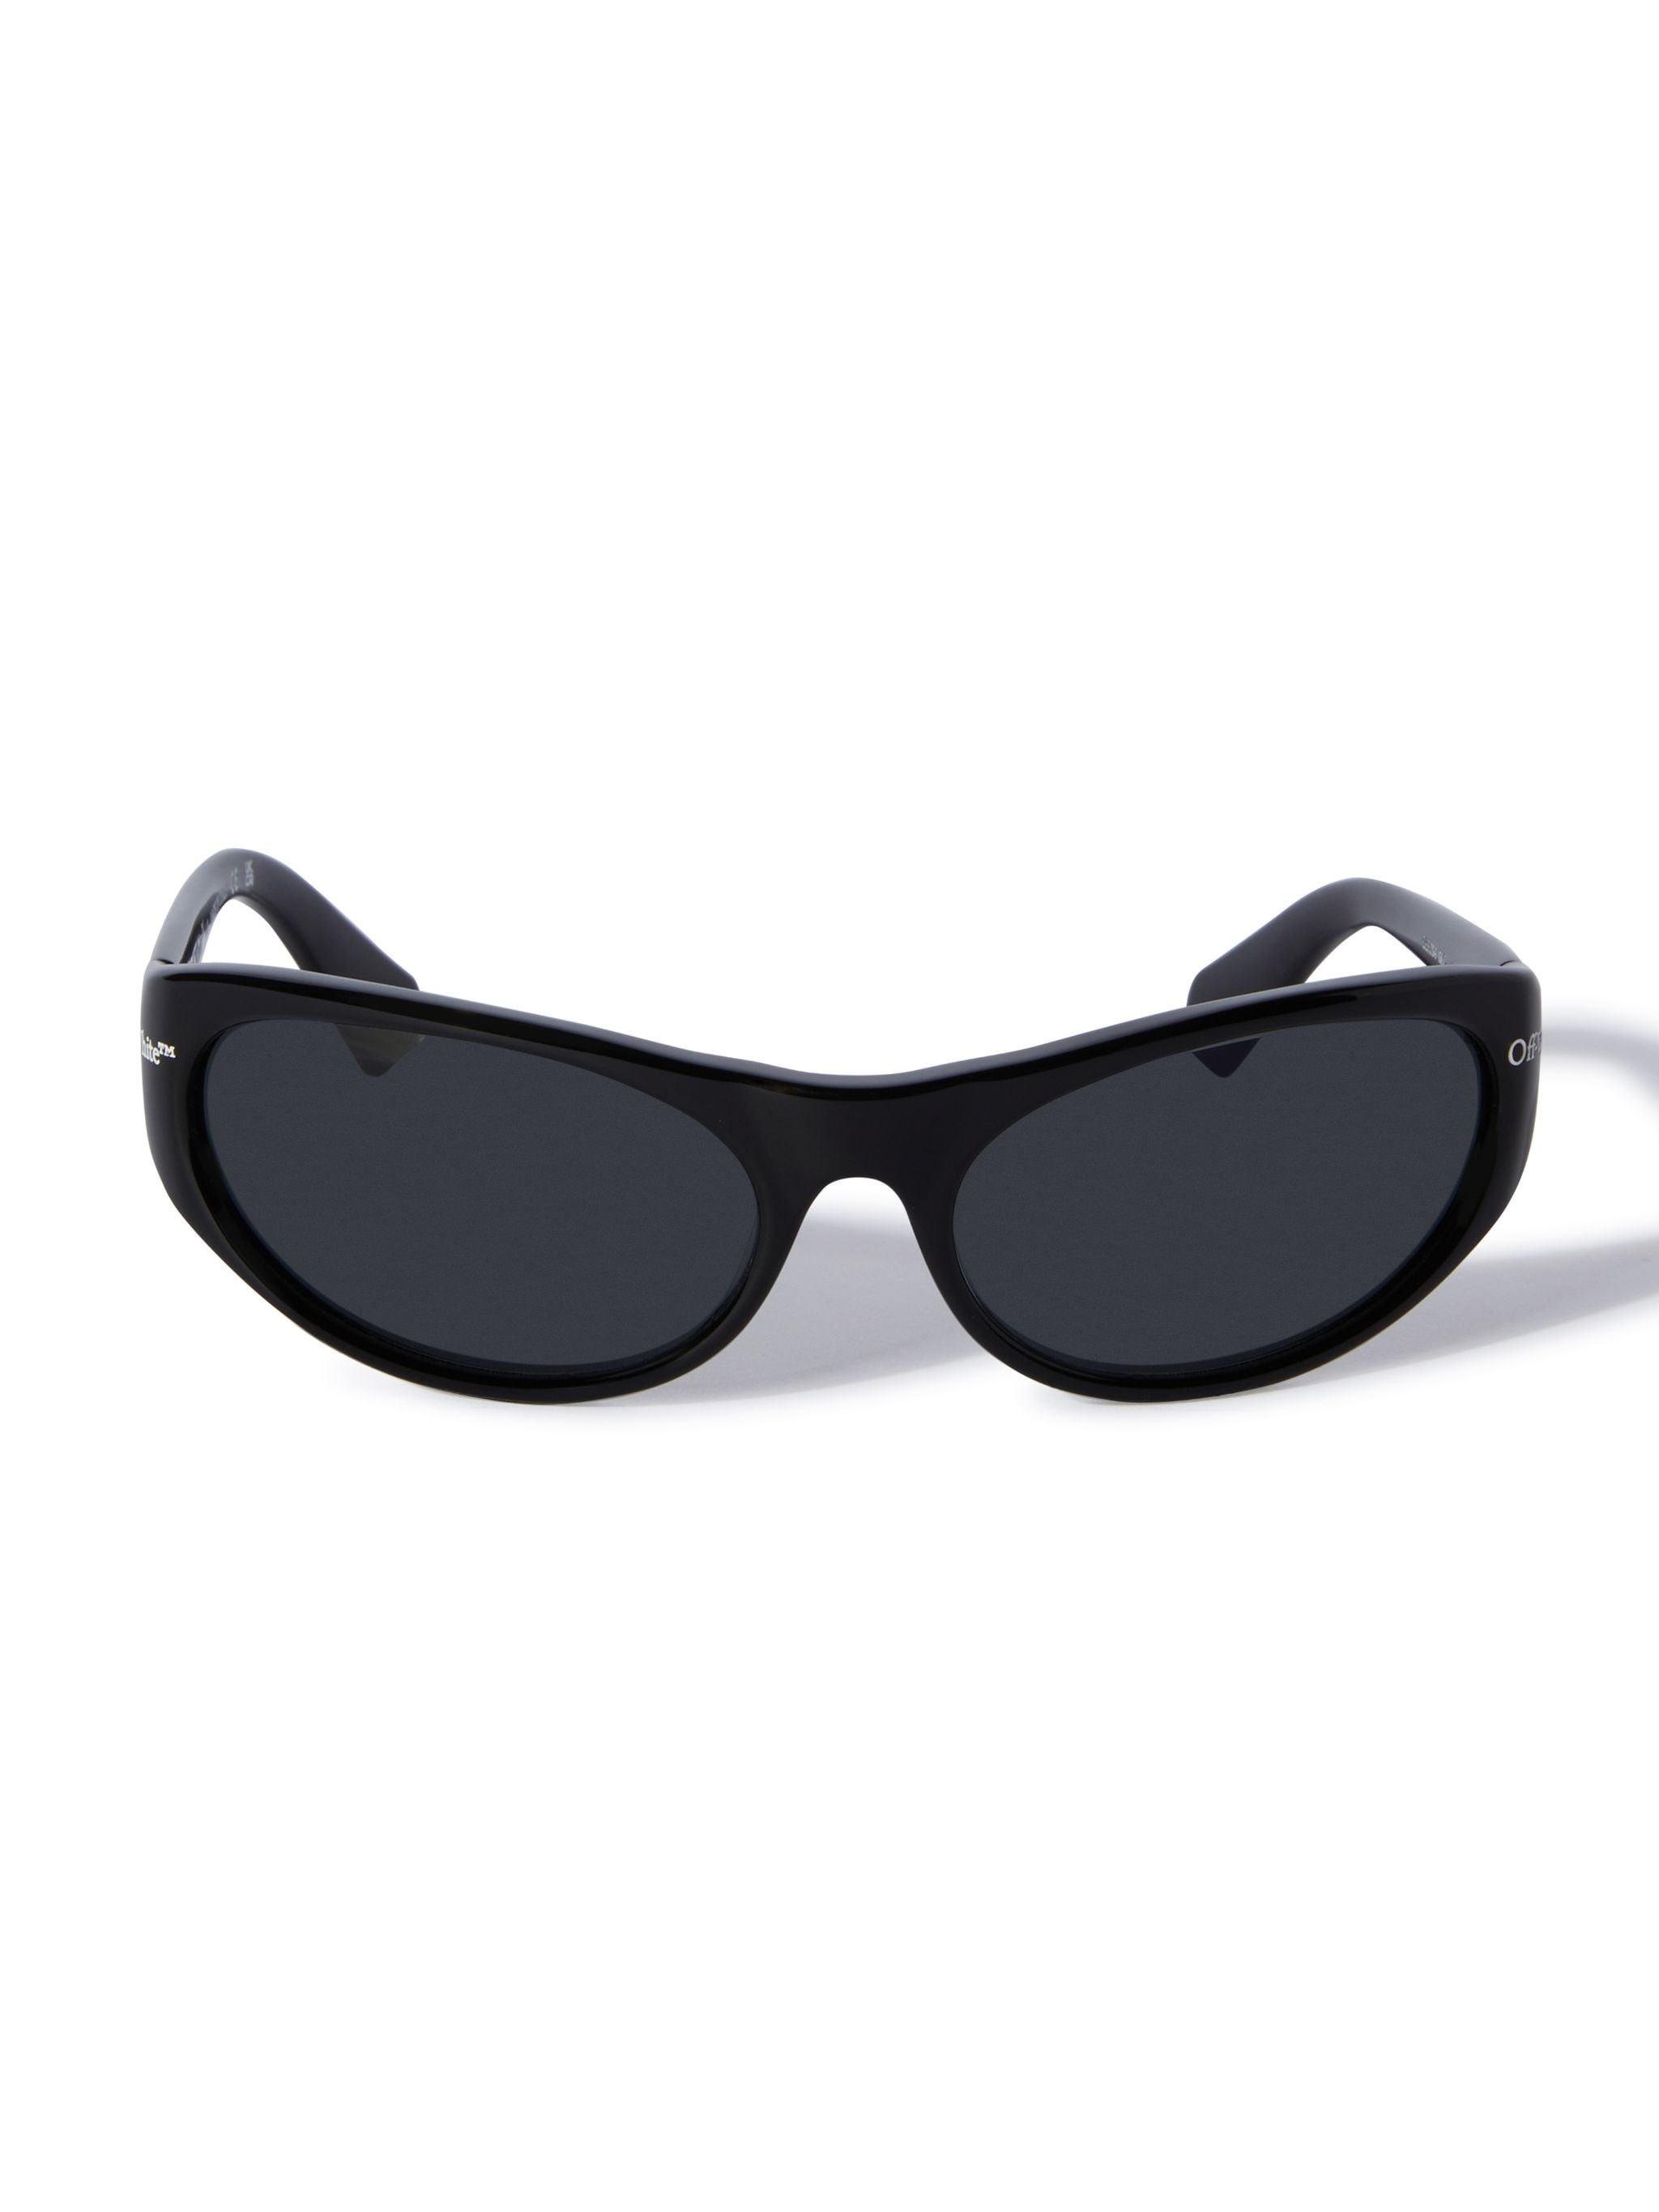 Napoli Sunglasses - 1